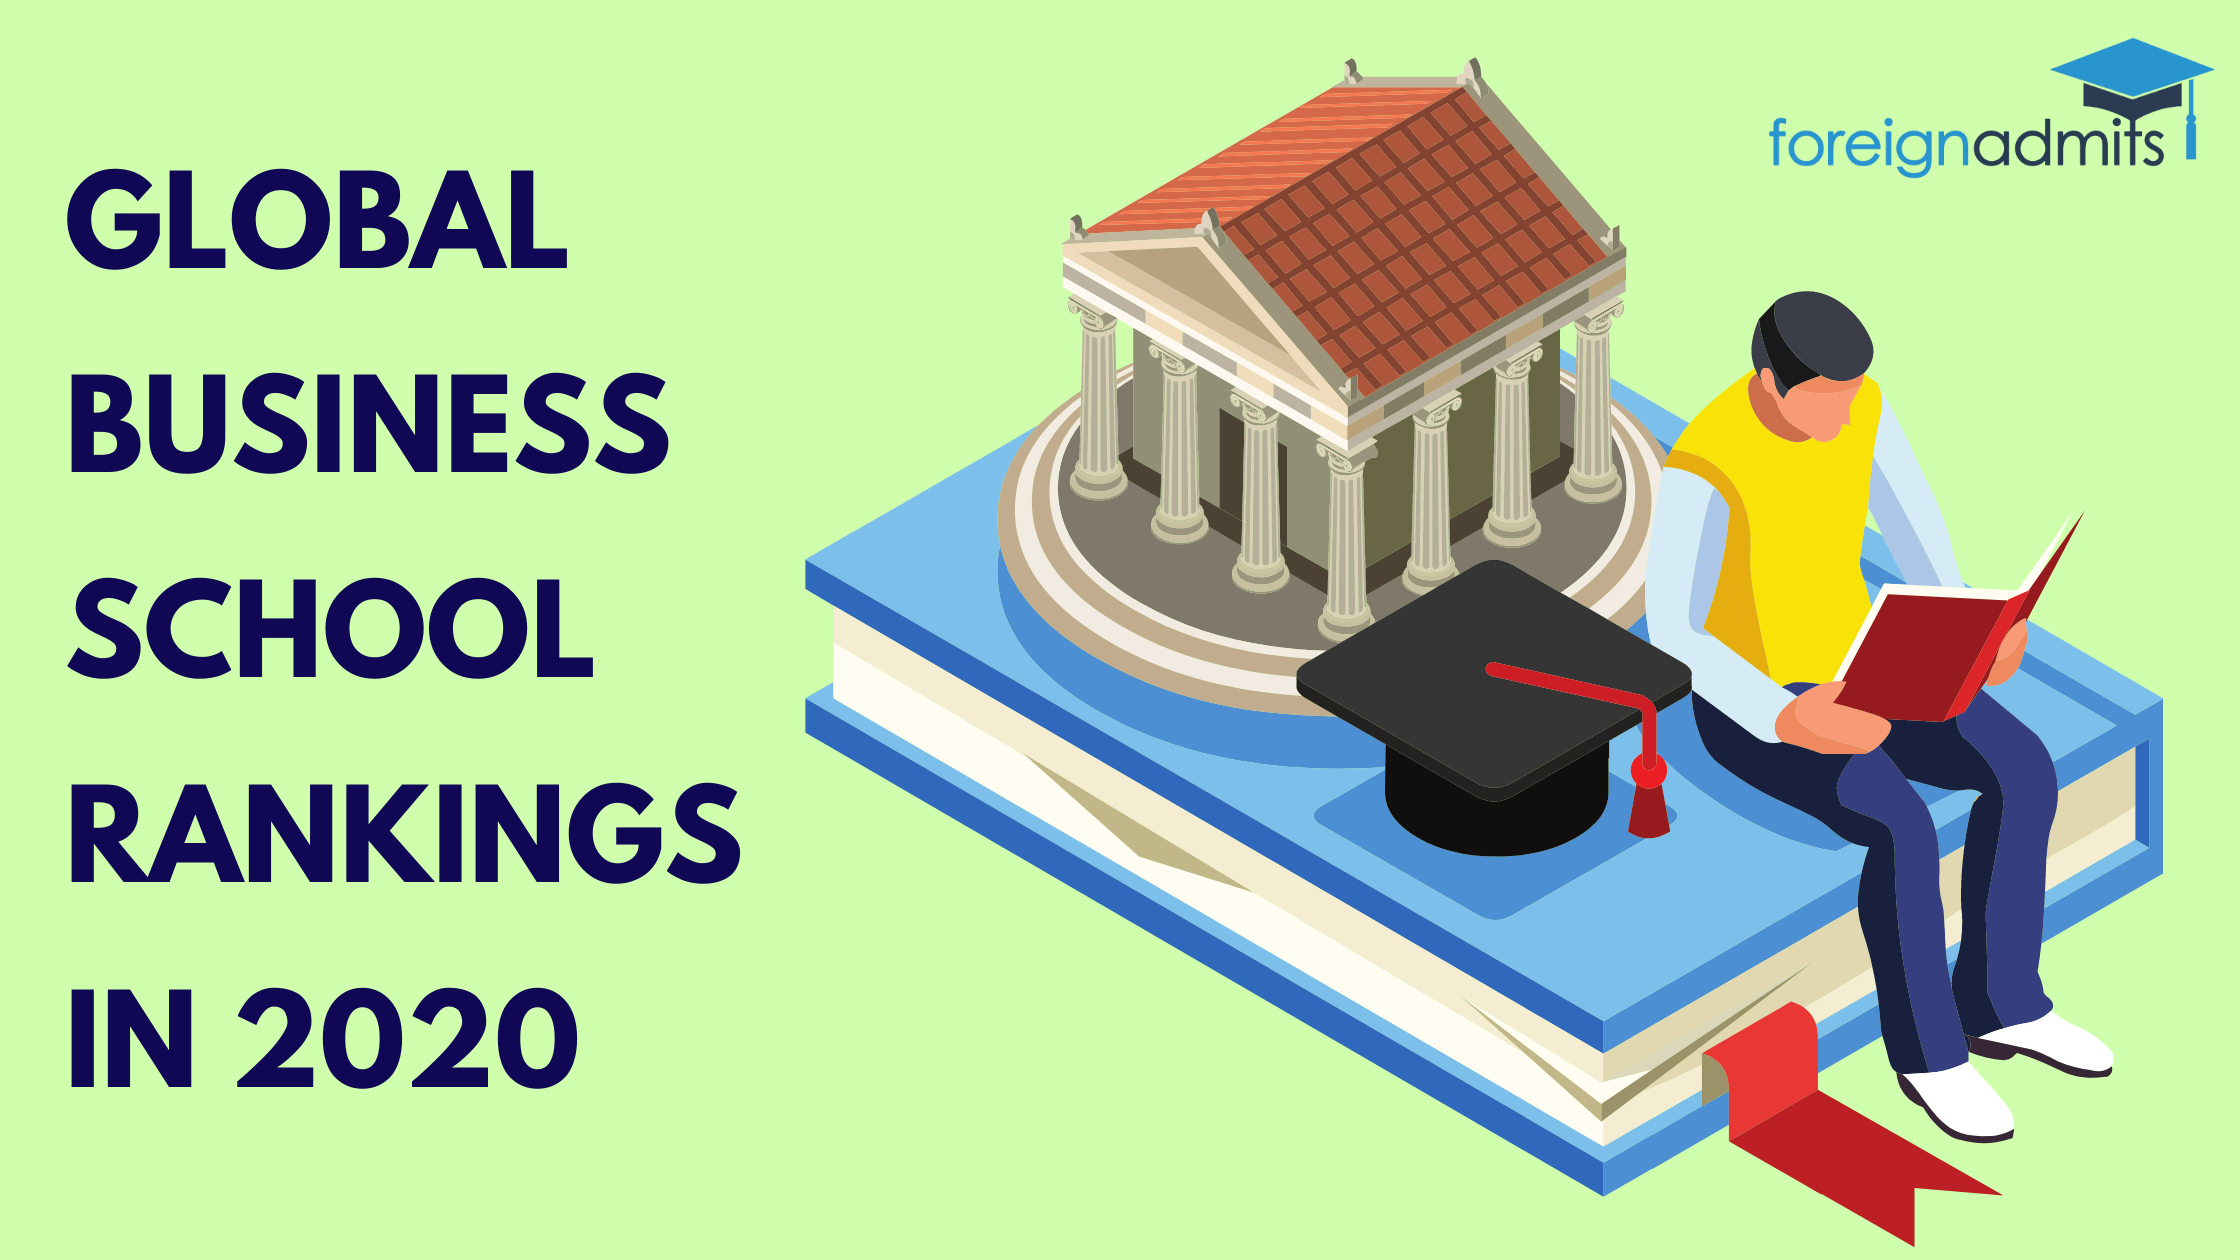 Global Business School Rankings in 2020